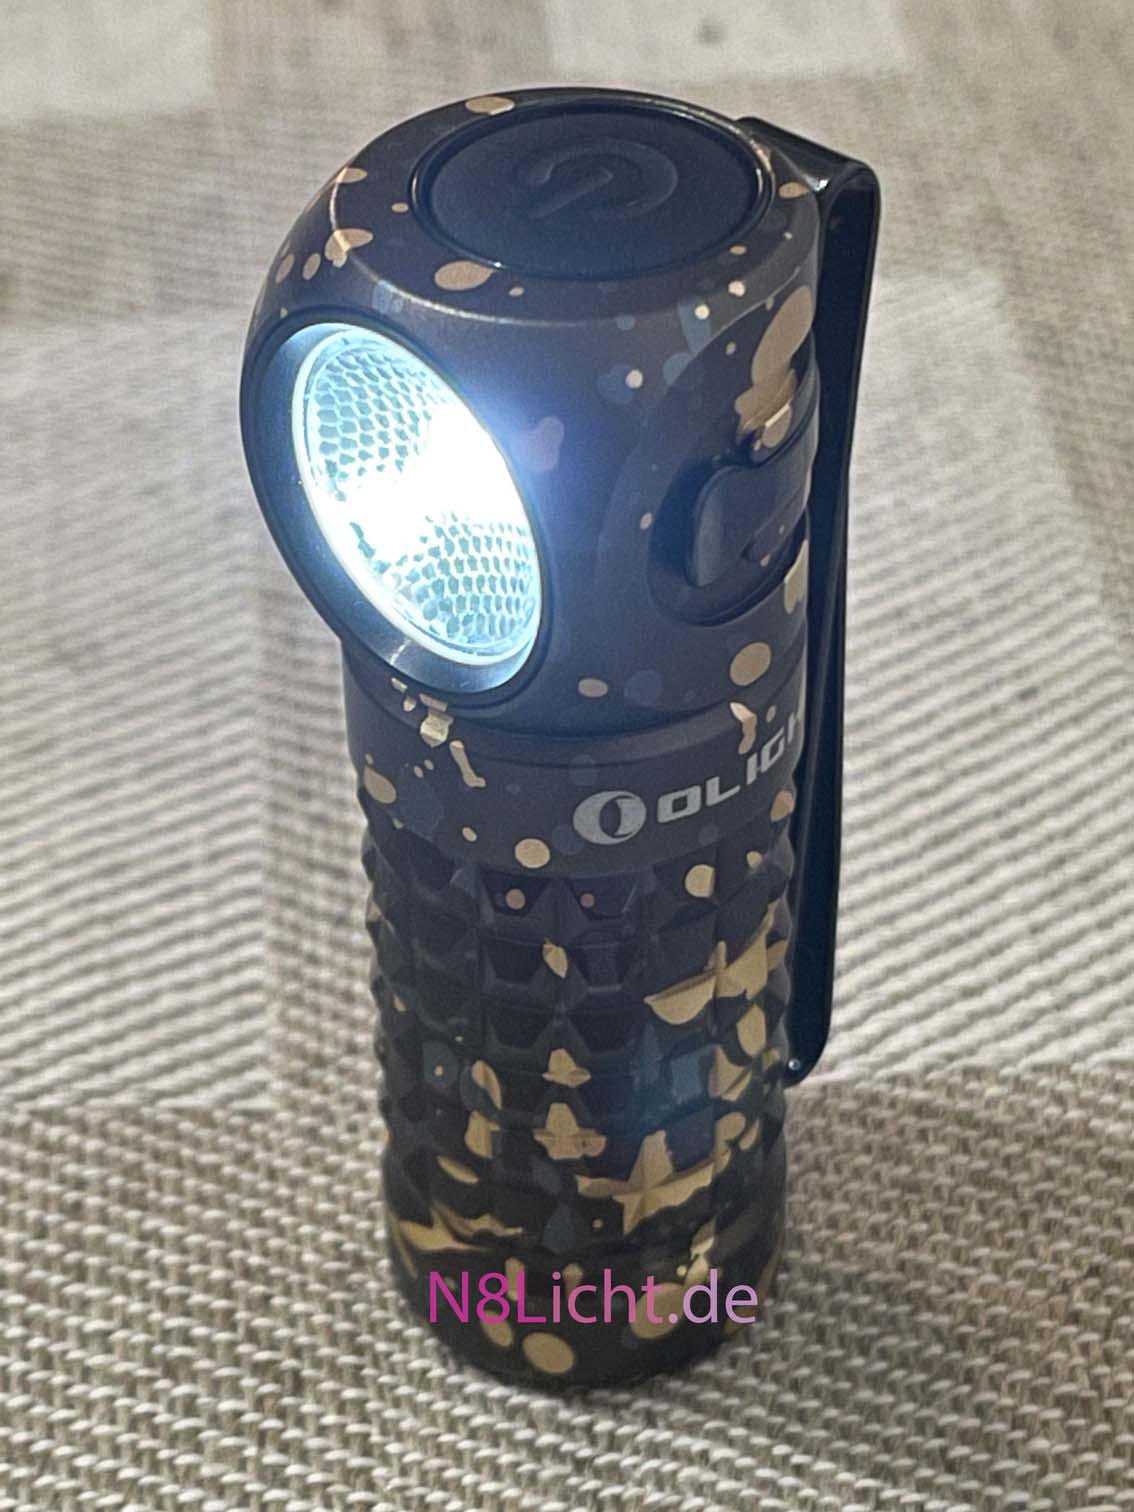 Perun mini leuchtet - Desert Camo Aluminium - limitiert - Taschenlampe von Olight